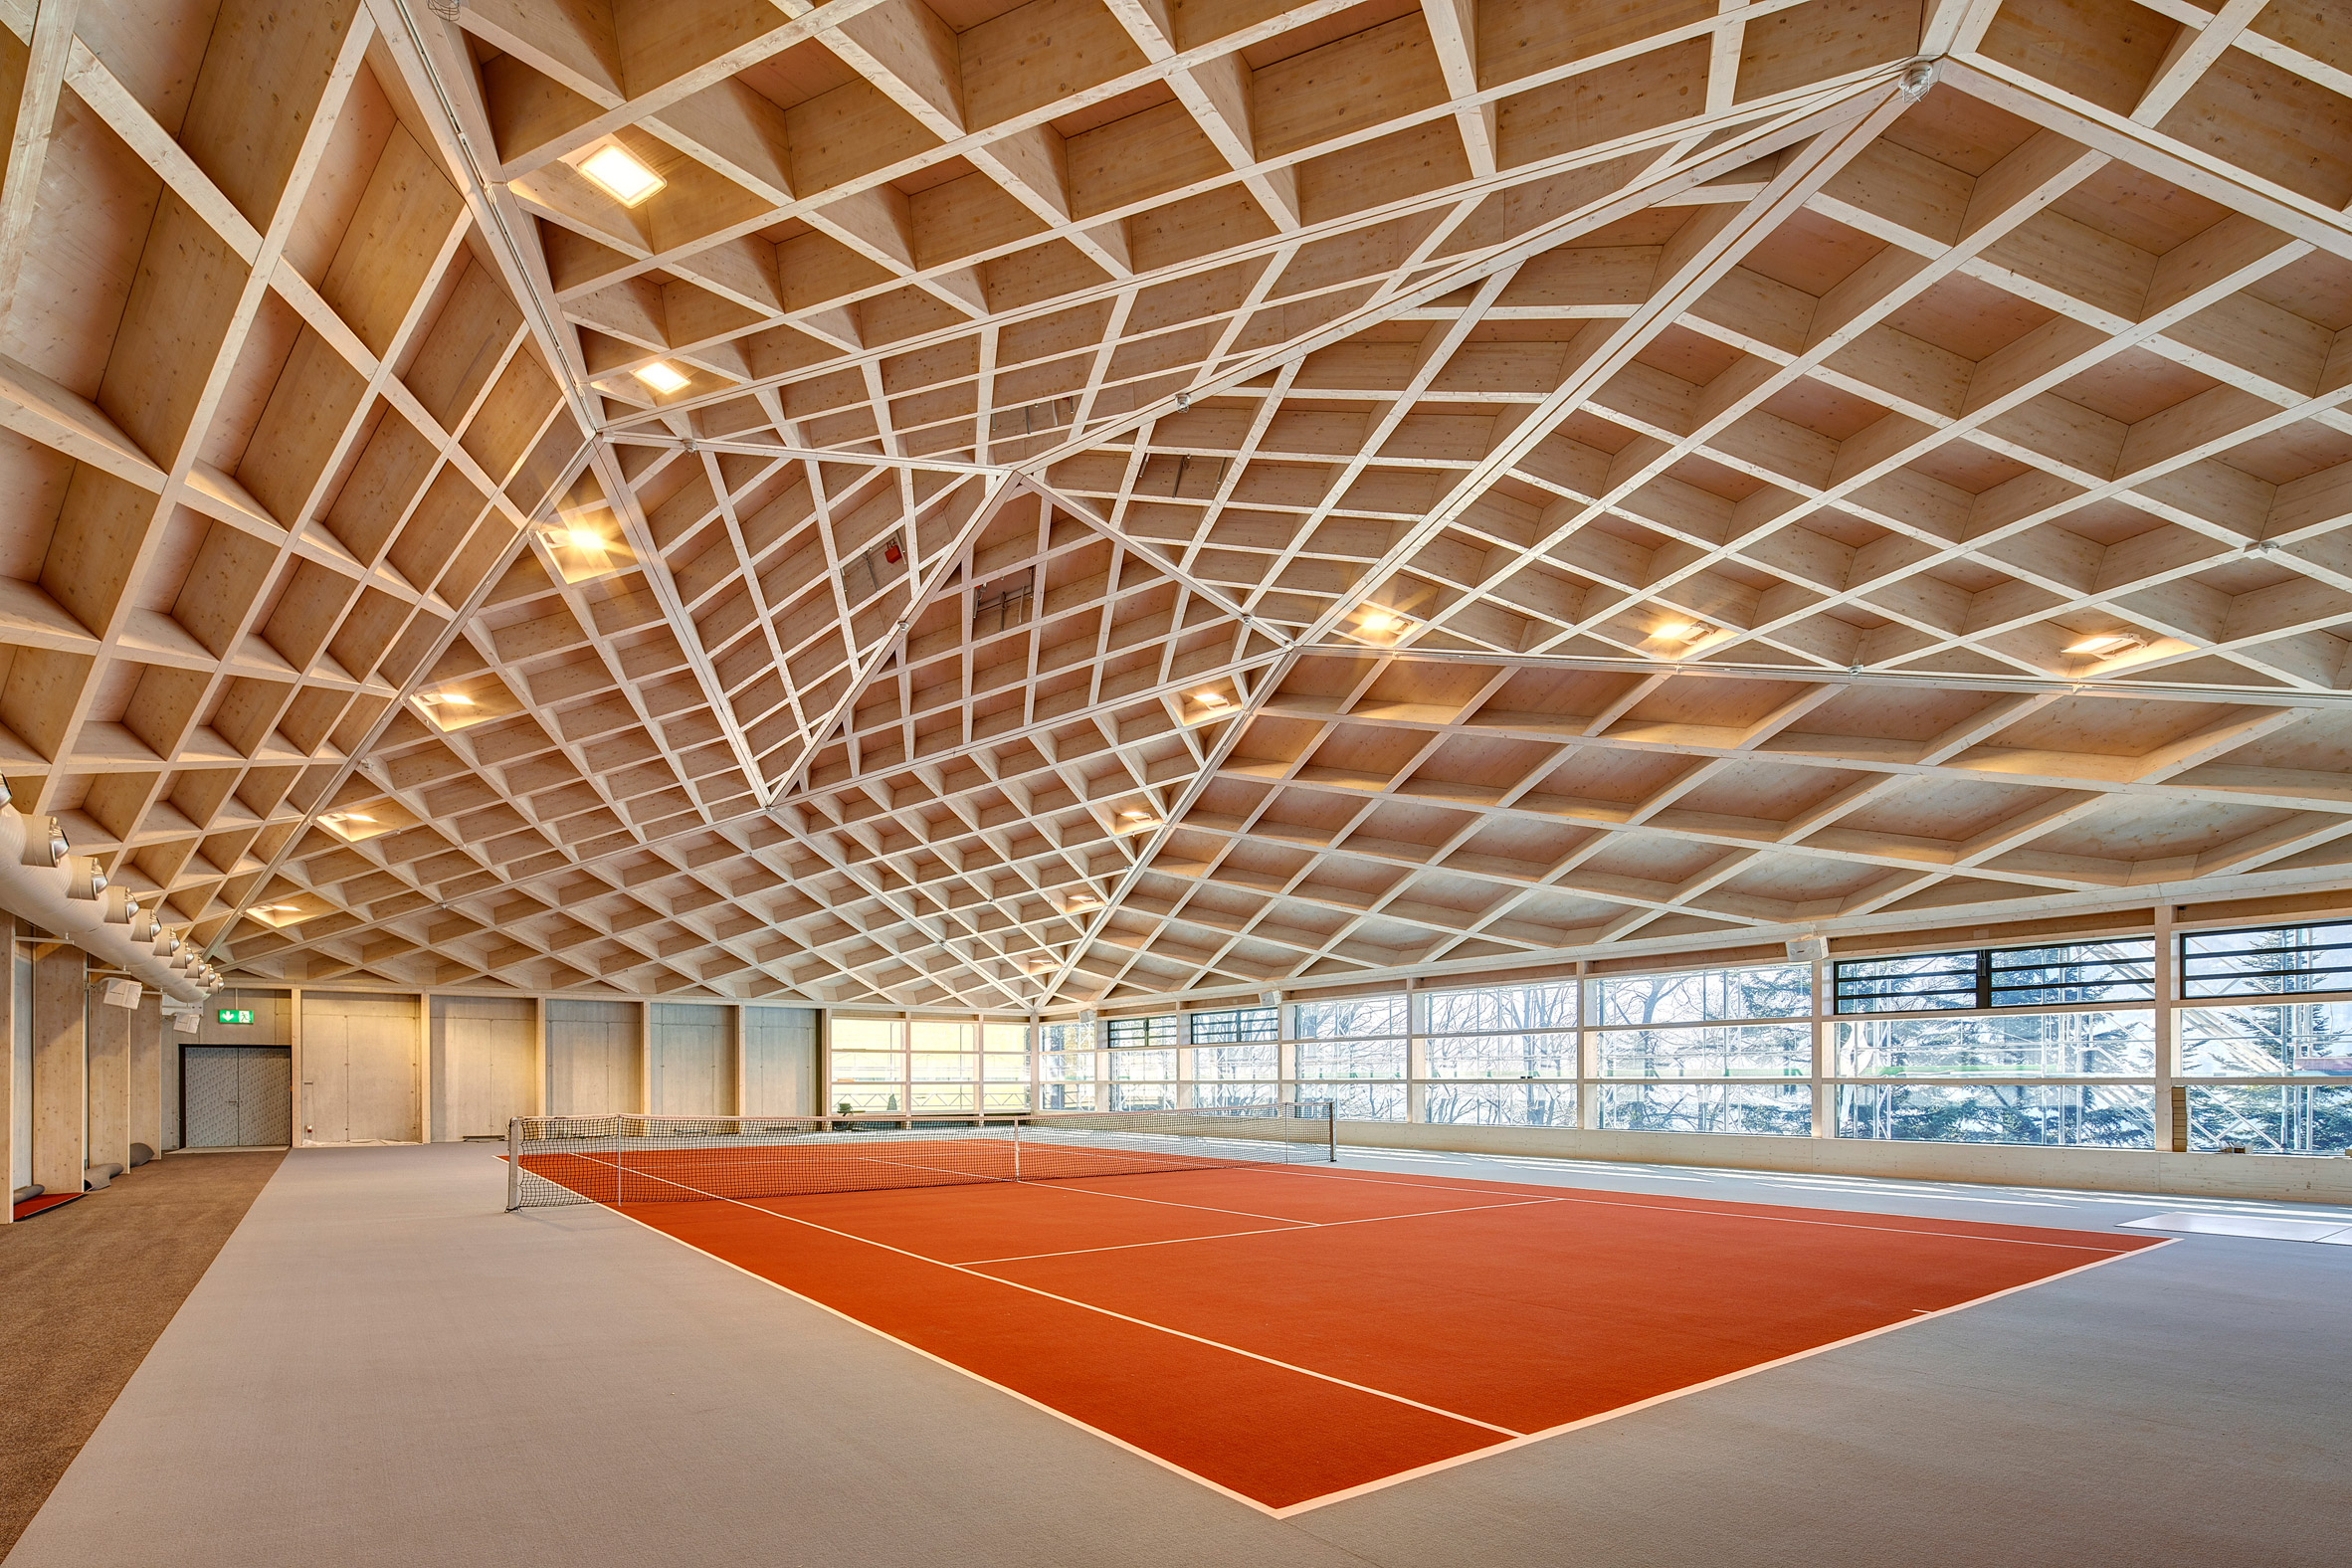 Interior of Diamond Domes tennis courts designed by Rüssli Architekten with CLT roofs by Neue Holzbau in the Swiss Alps